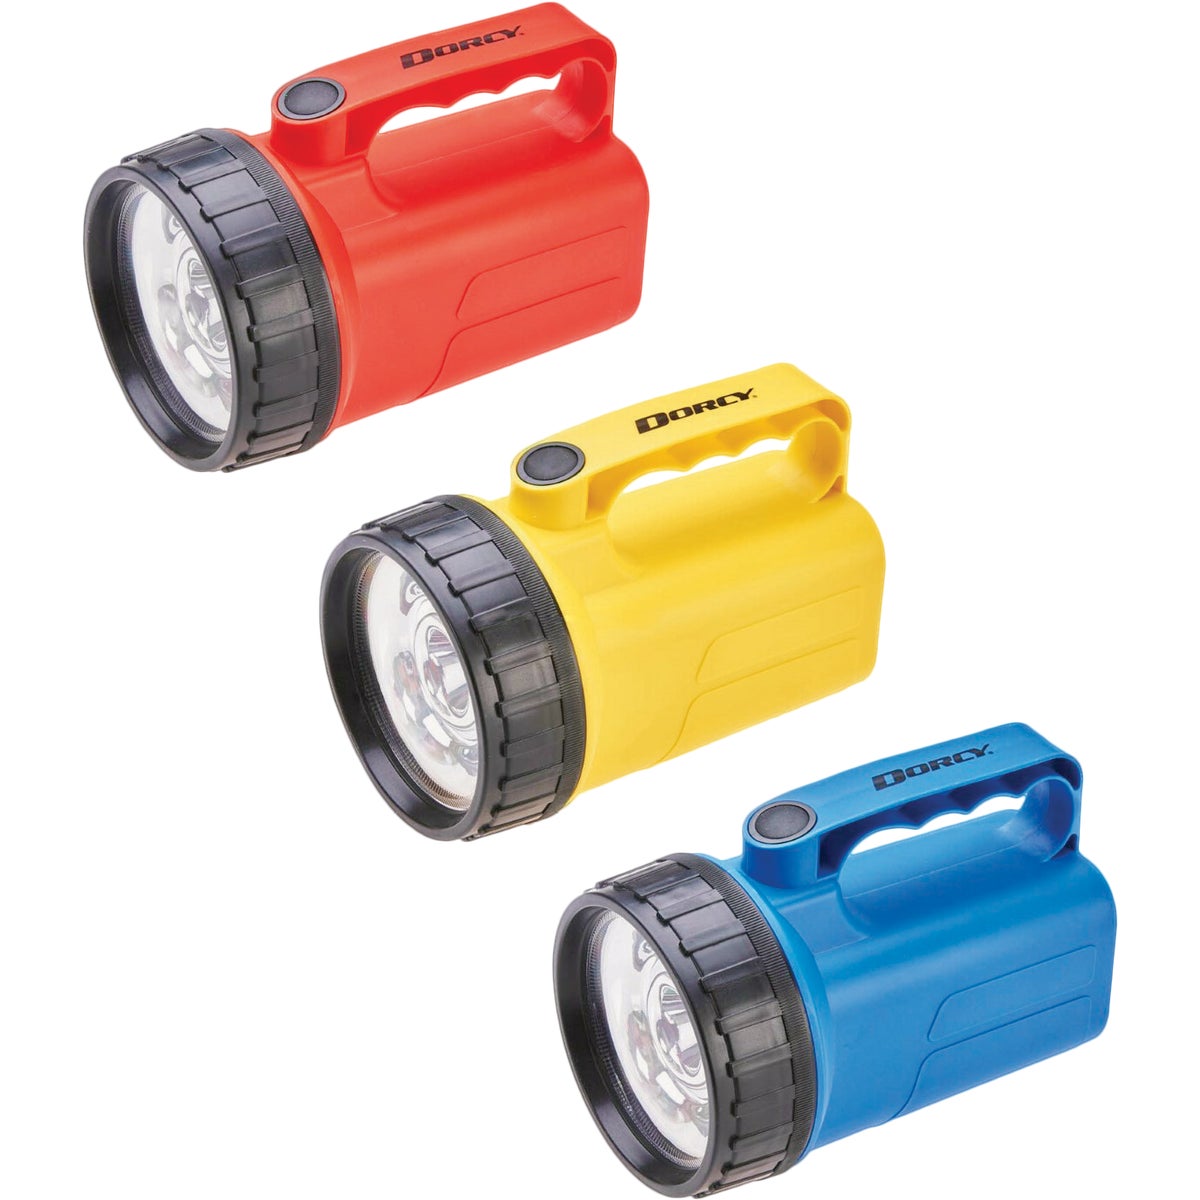 Dorcy LED Lantern with Handle